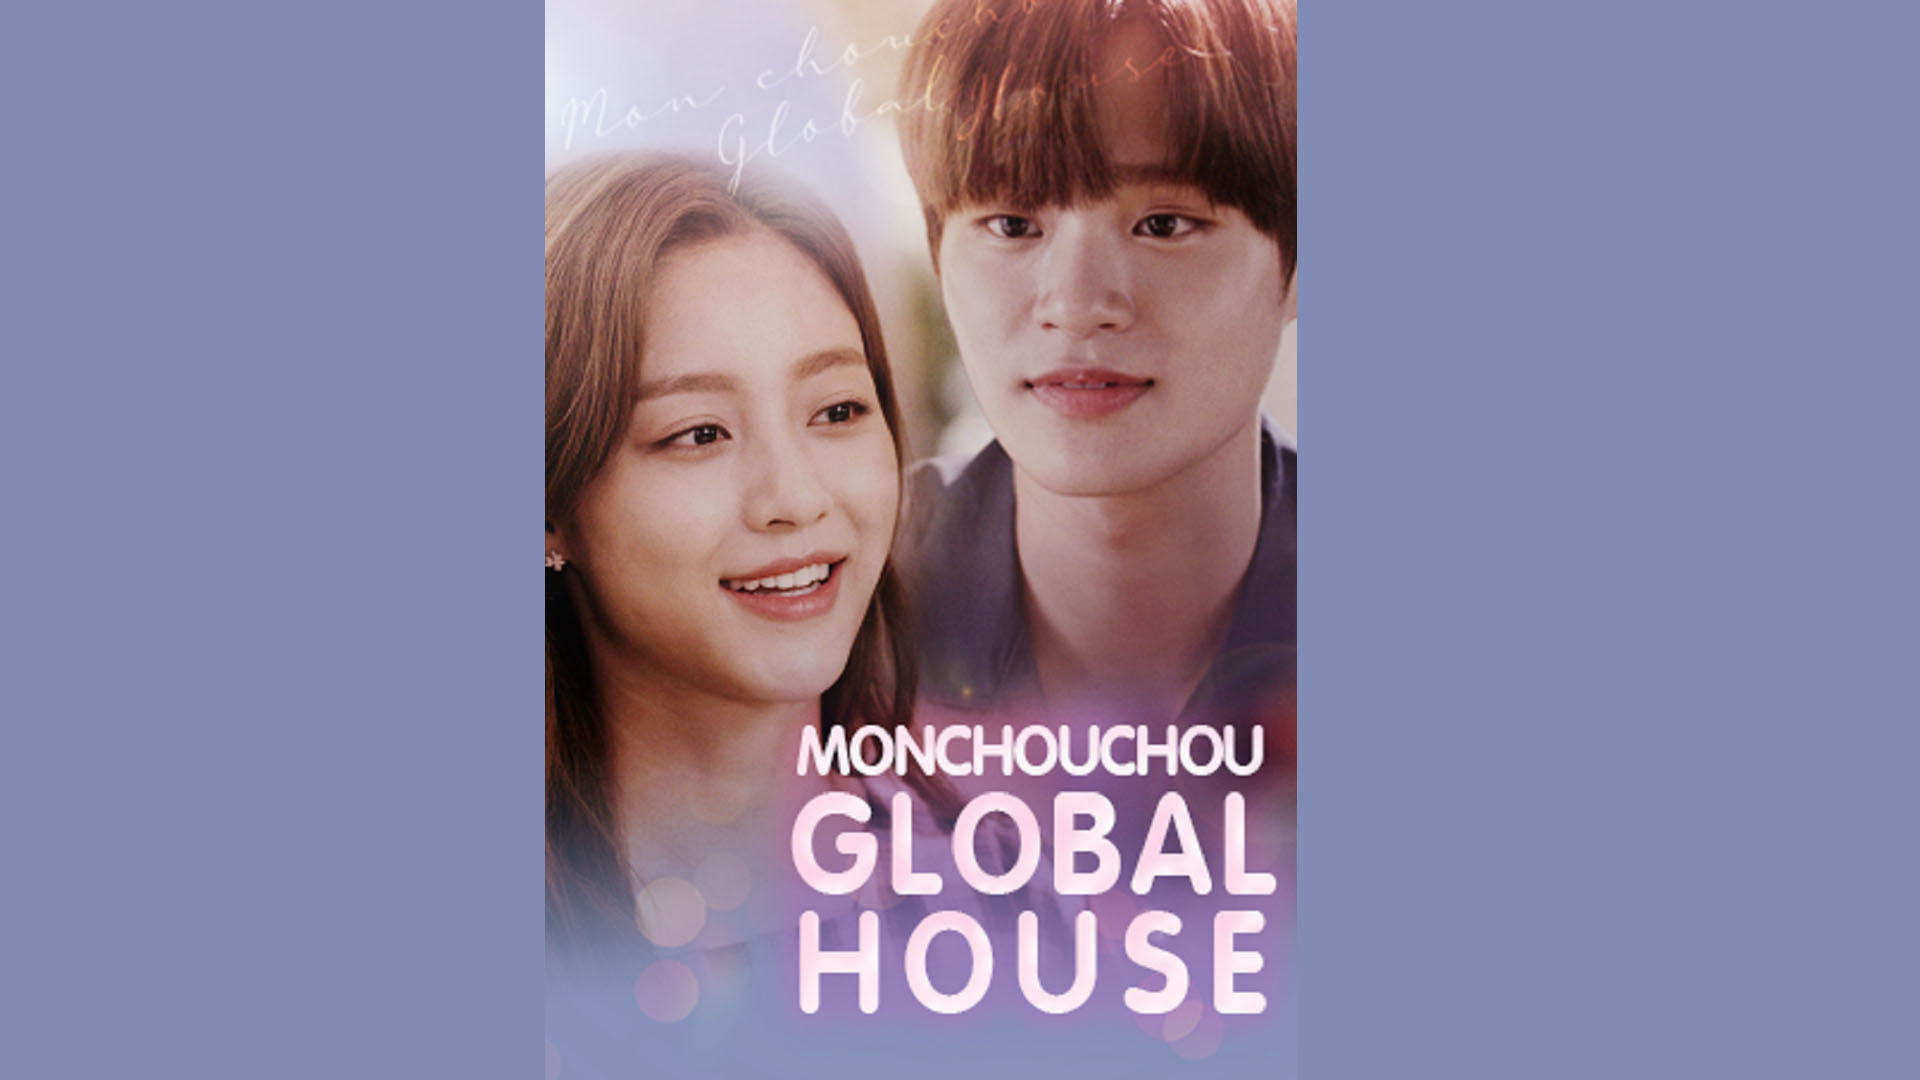 House monchouchou global Download Drama